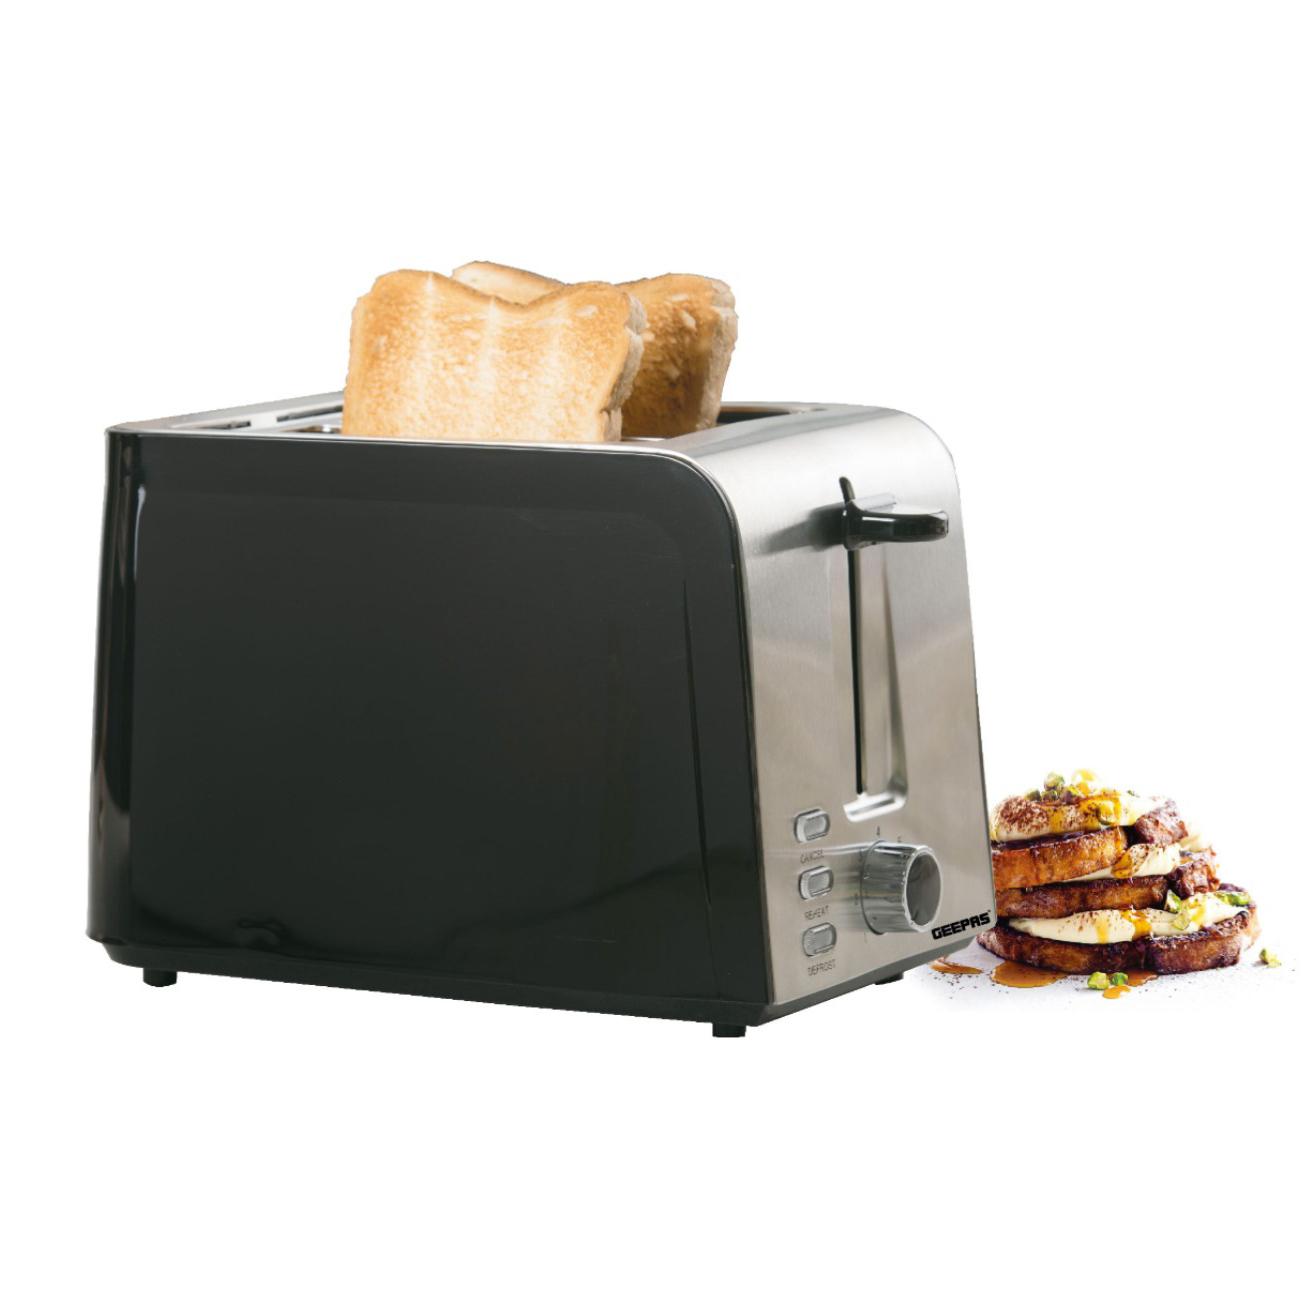 توستر للخبز Geepas 850W 2-Slice Bread Toaster with Crumb Tray